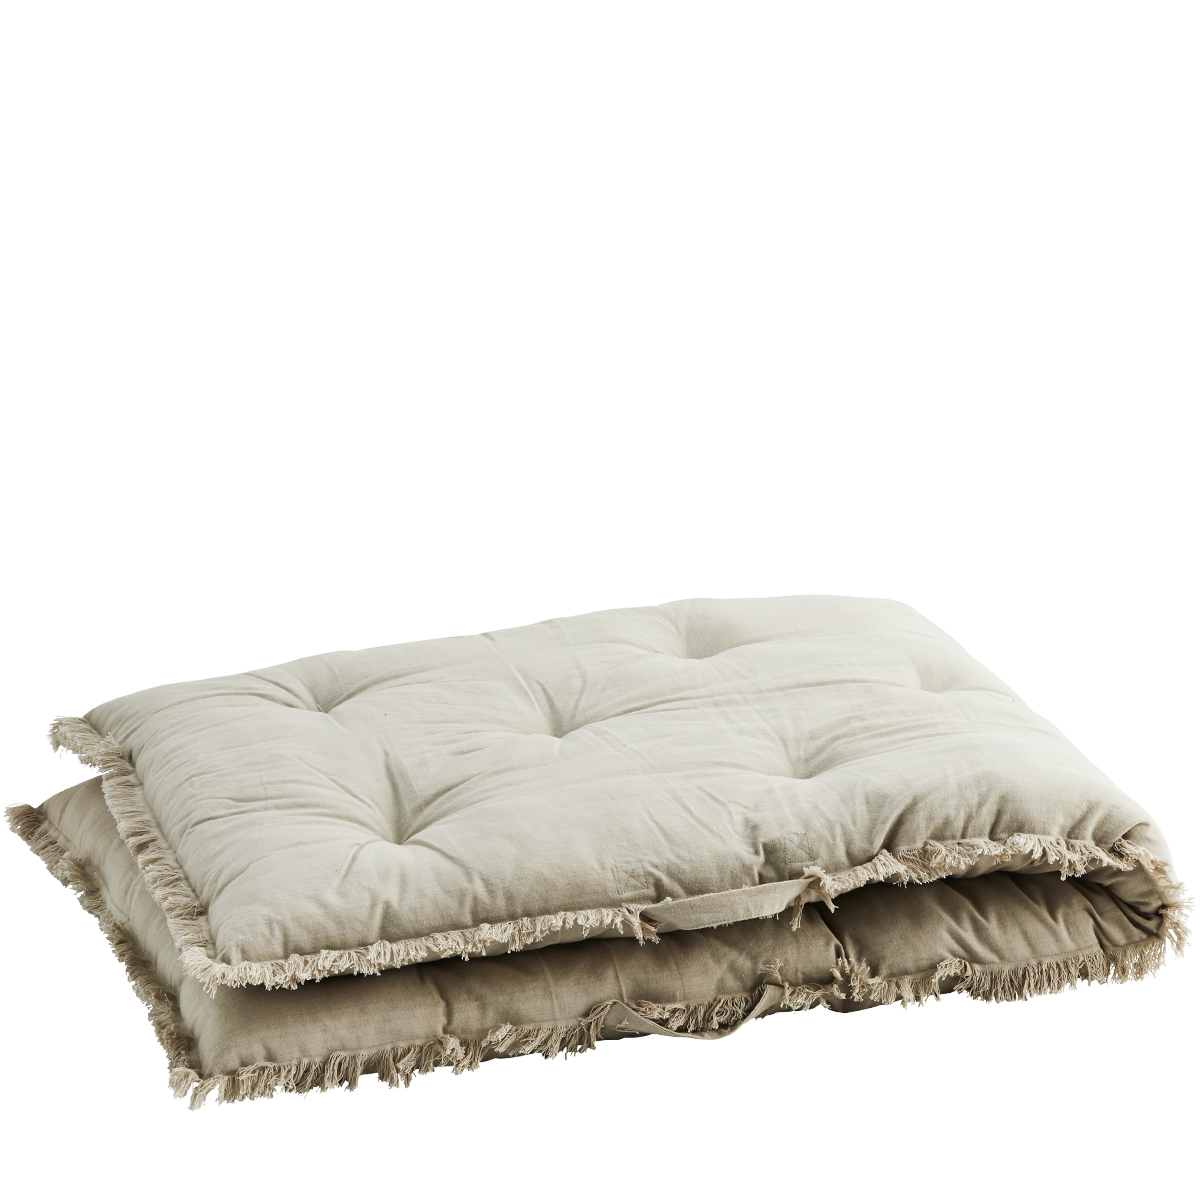 Cotton mattress w/ fringes